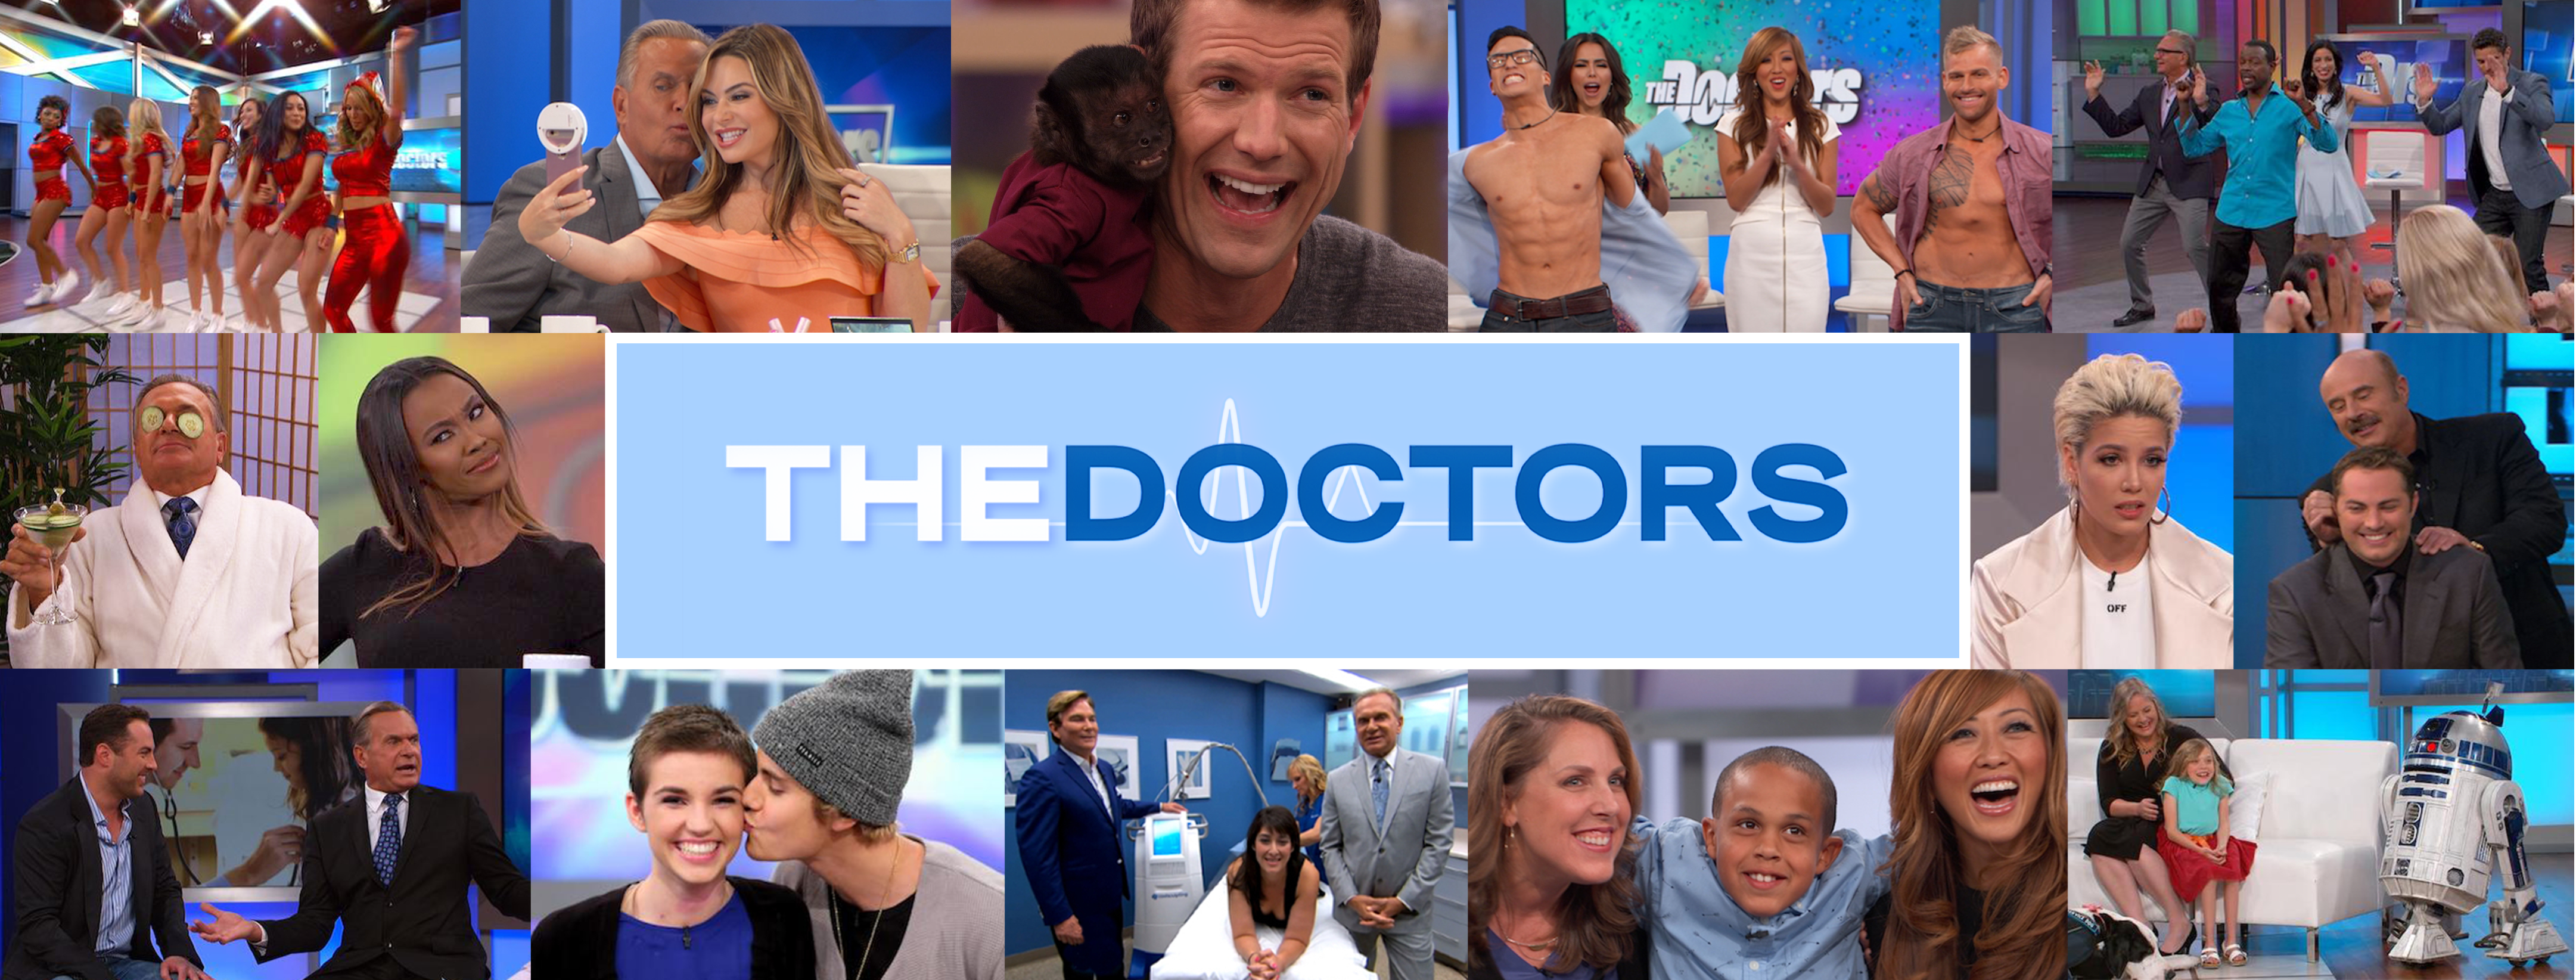 Hospital Scrubs The Doctors Tv Show